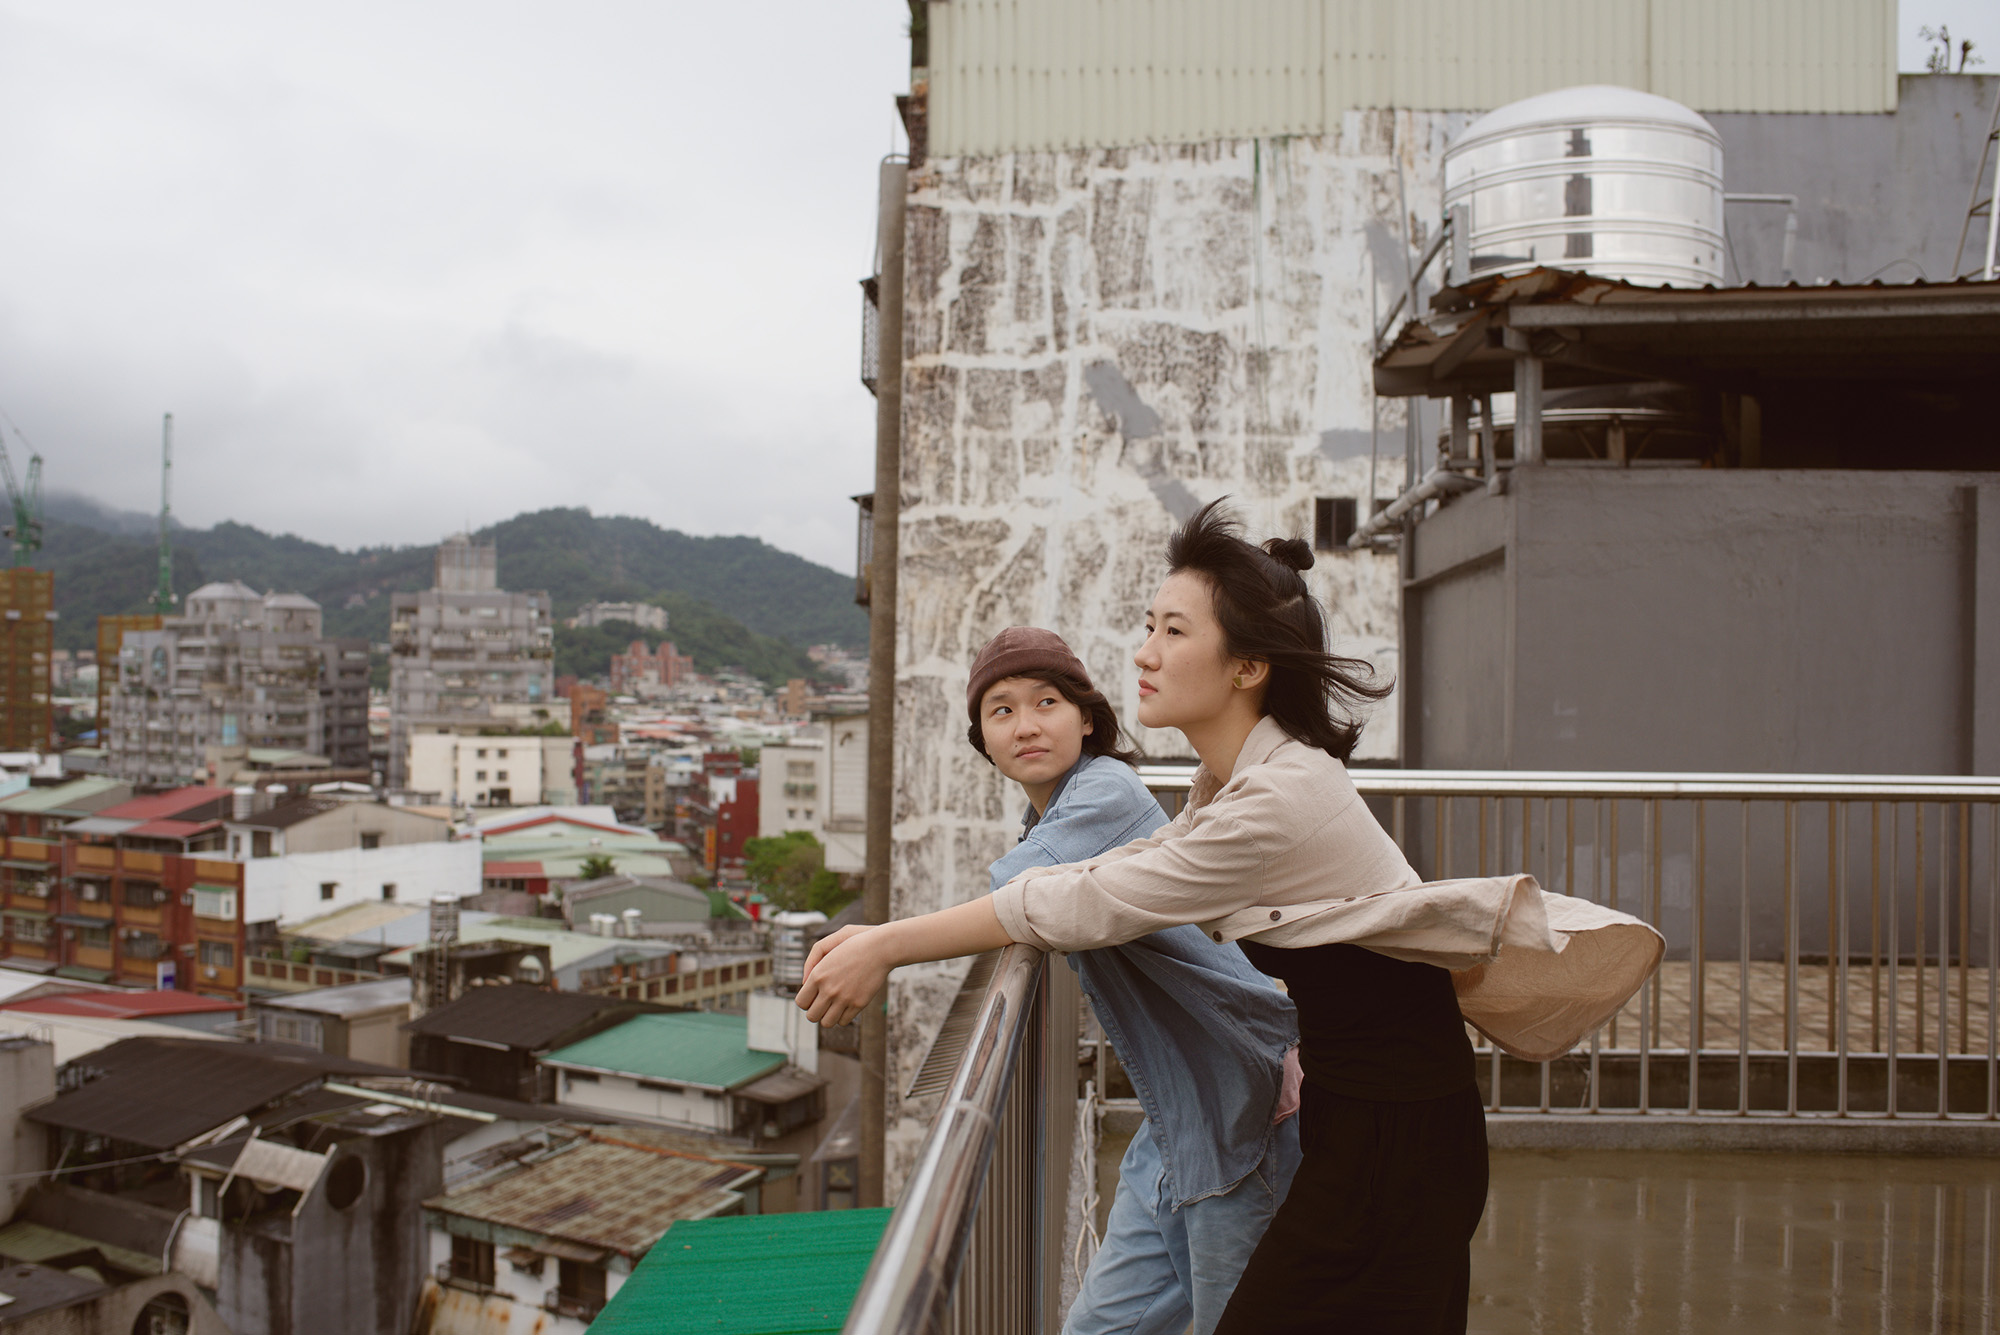 Menu Ma and Yellow on Menu’s family rooftop, New Taipei City, Taiwan, 2019